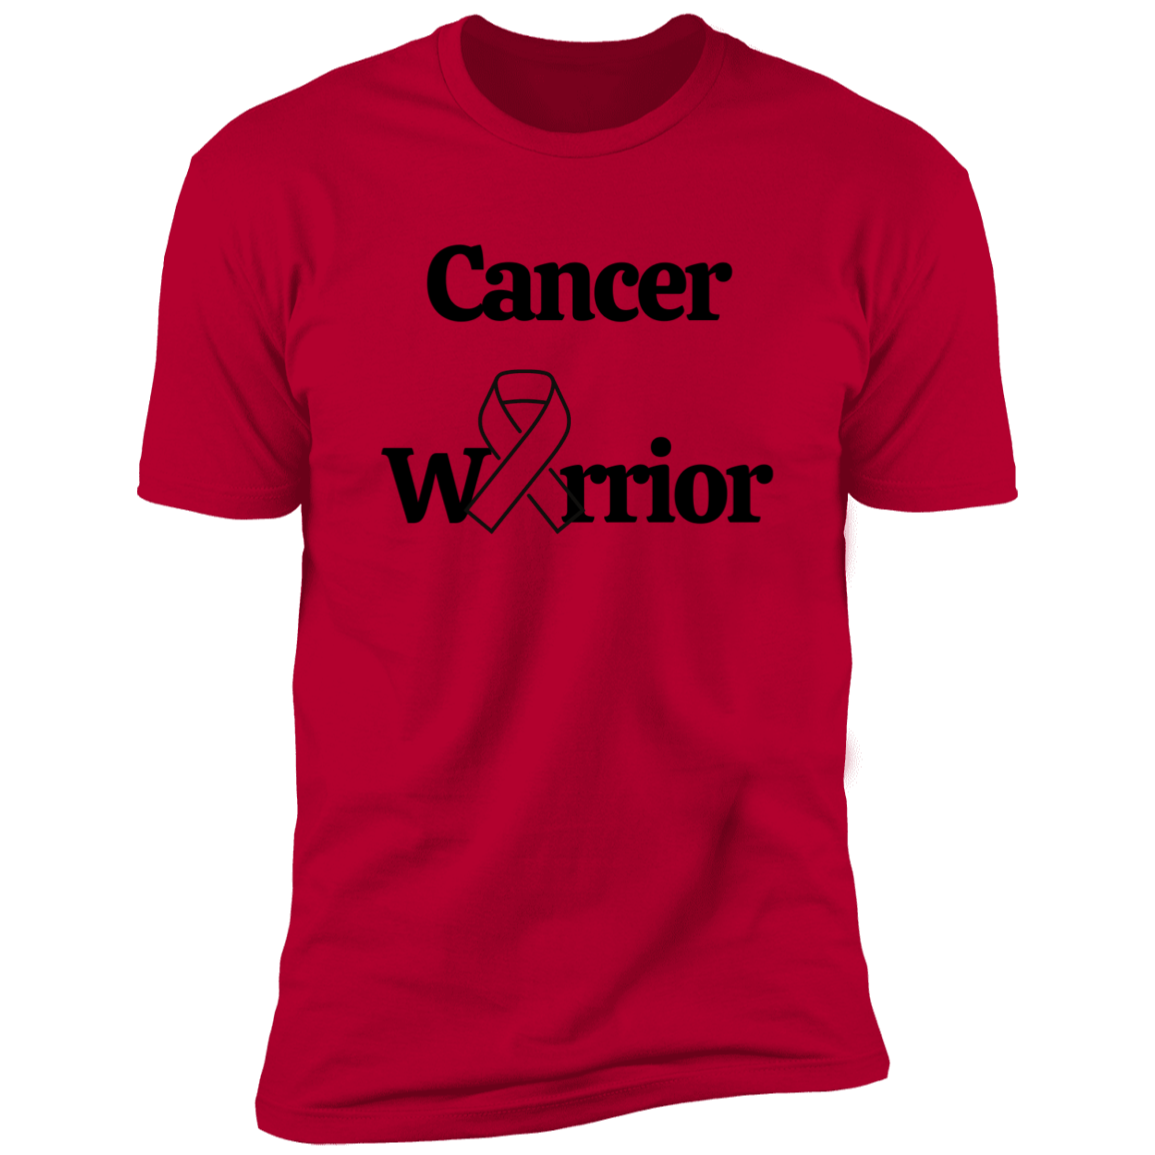 Cancer Warrior Tee